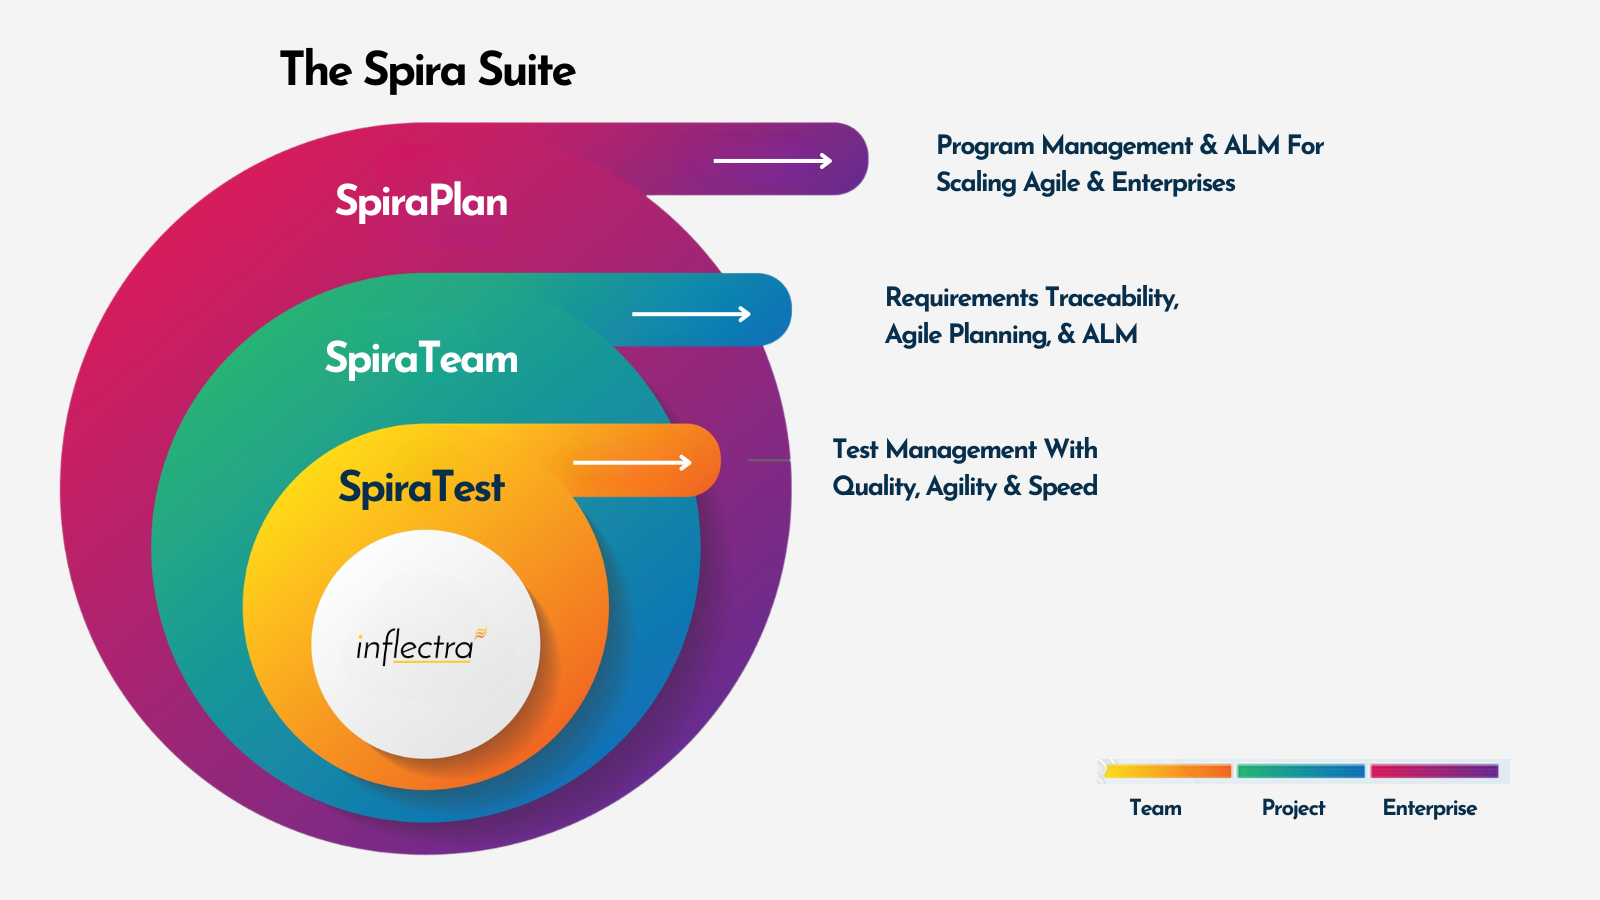 The Spira Suite: Navigating Through SpiraTest, SpiraTeam, and SpiraPlan